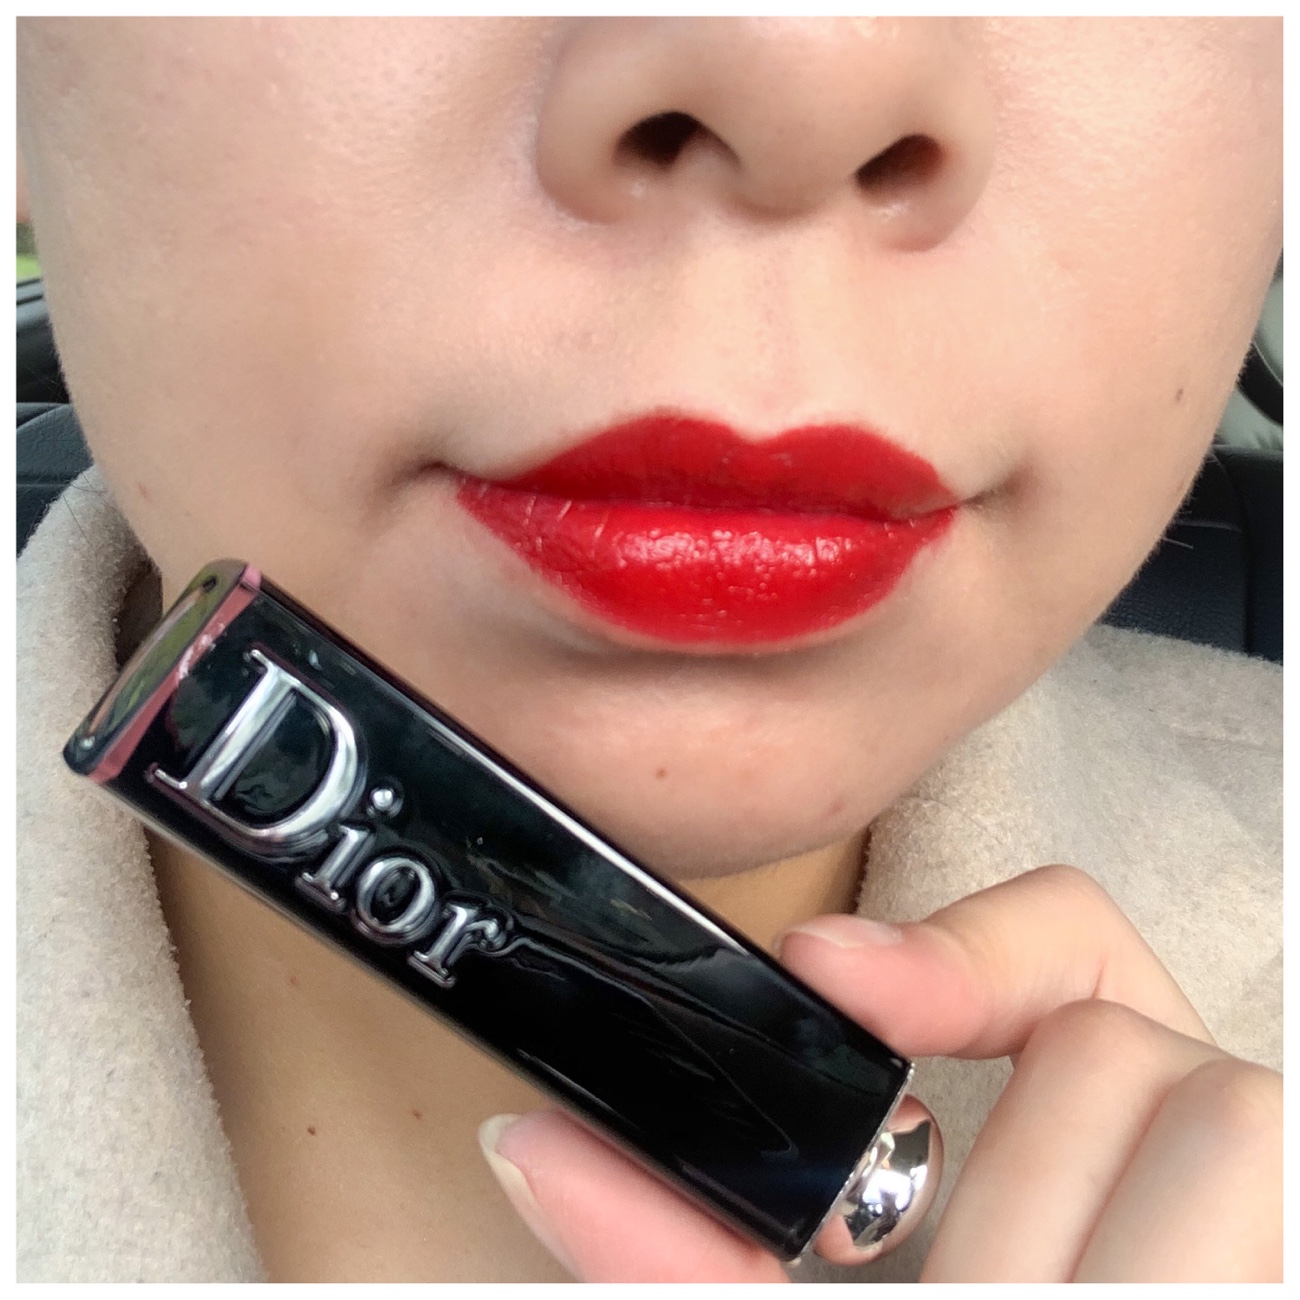 dior addict red lipstick